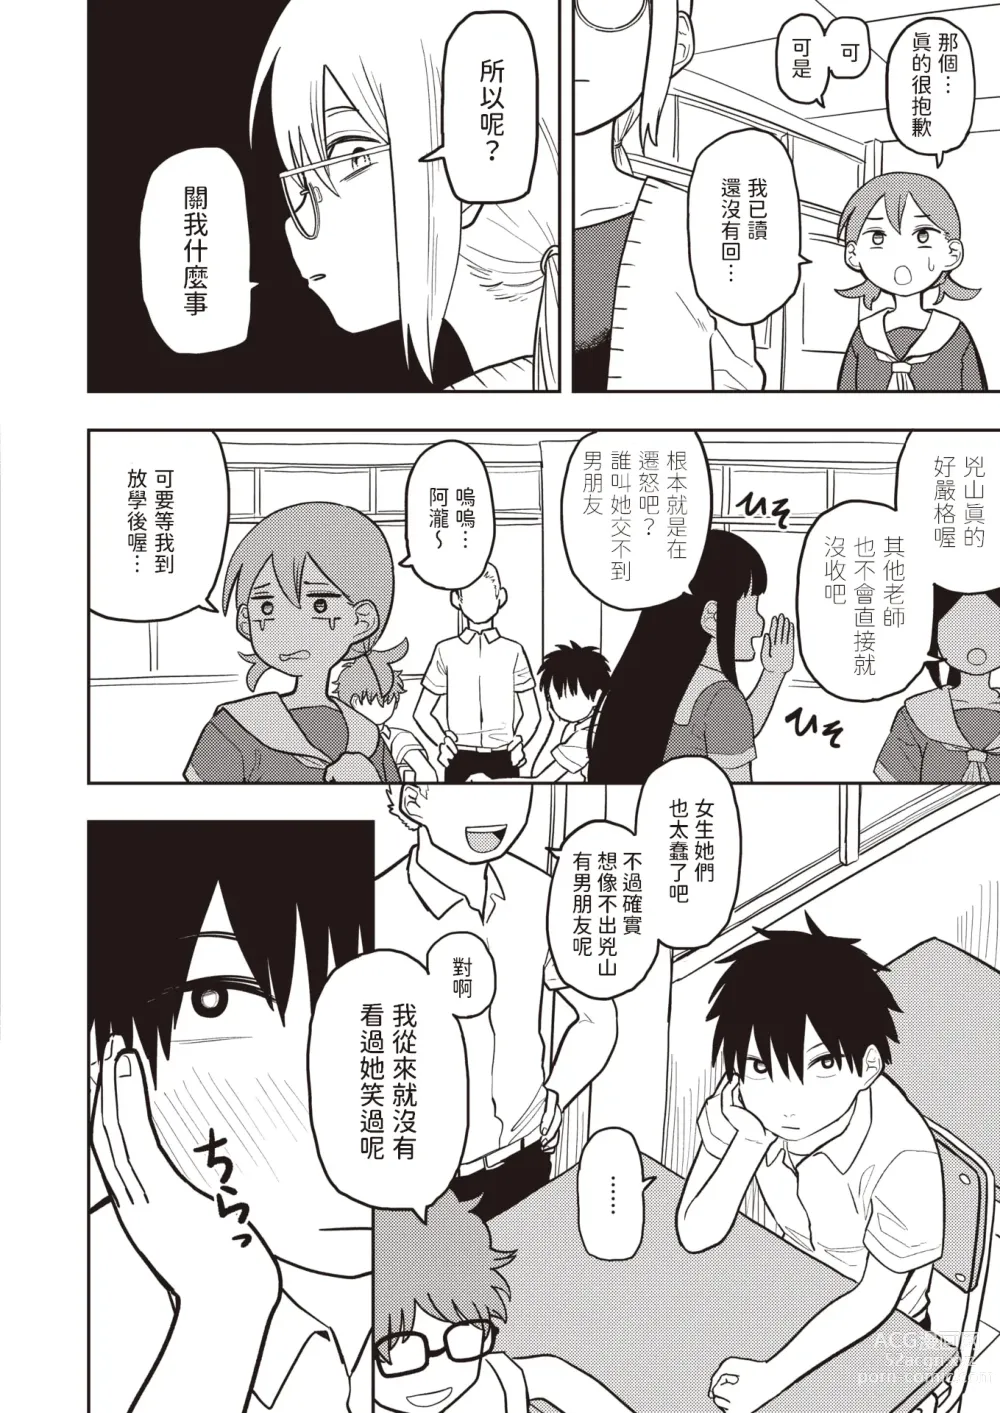 Page 2 of manga Hidoi yo Kiriyama Sensei - Thats really mean!